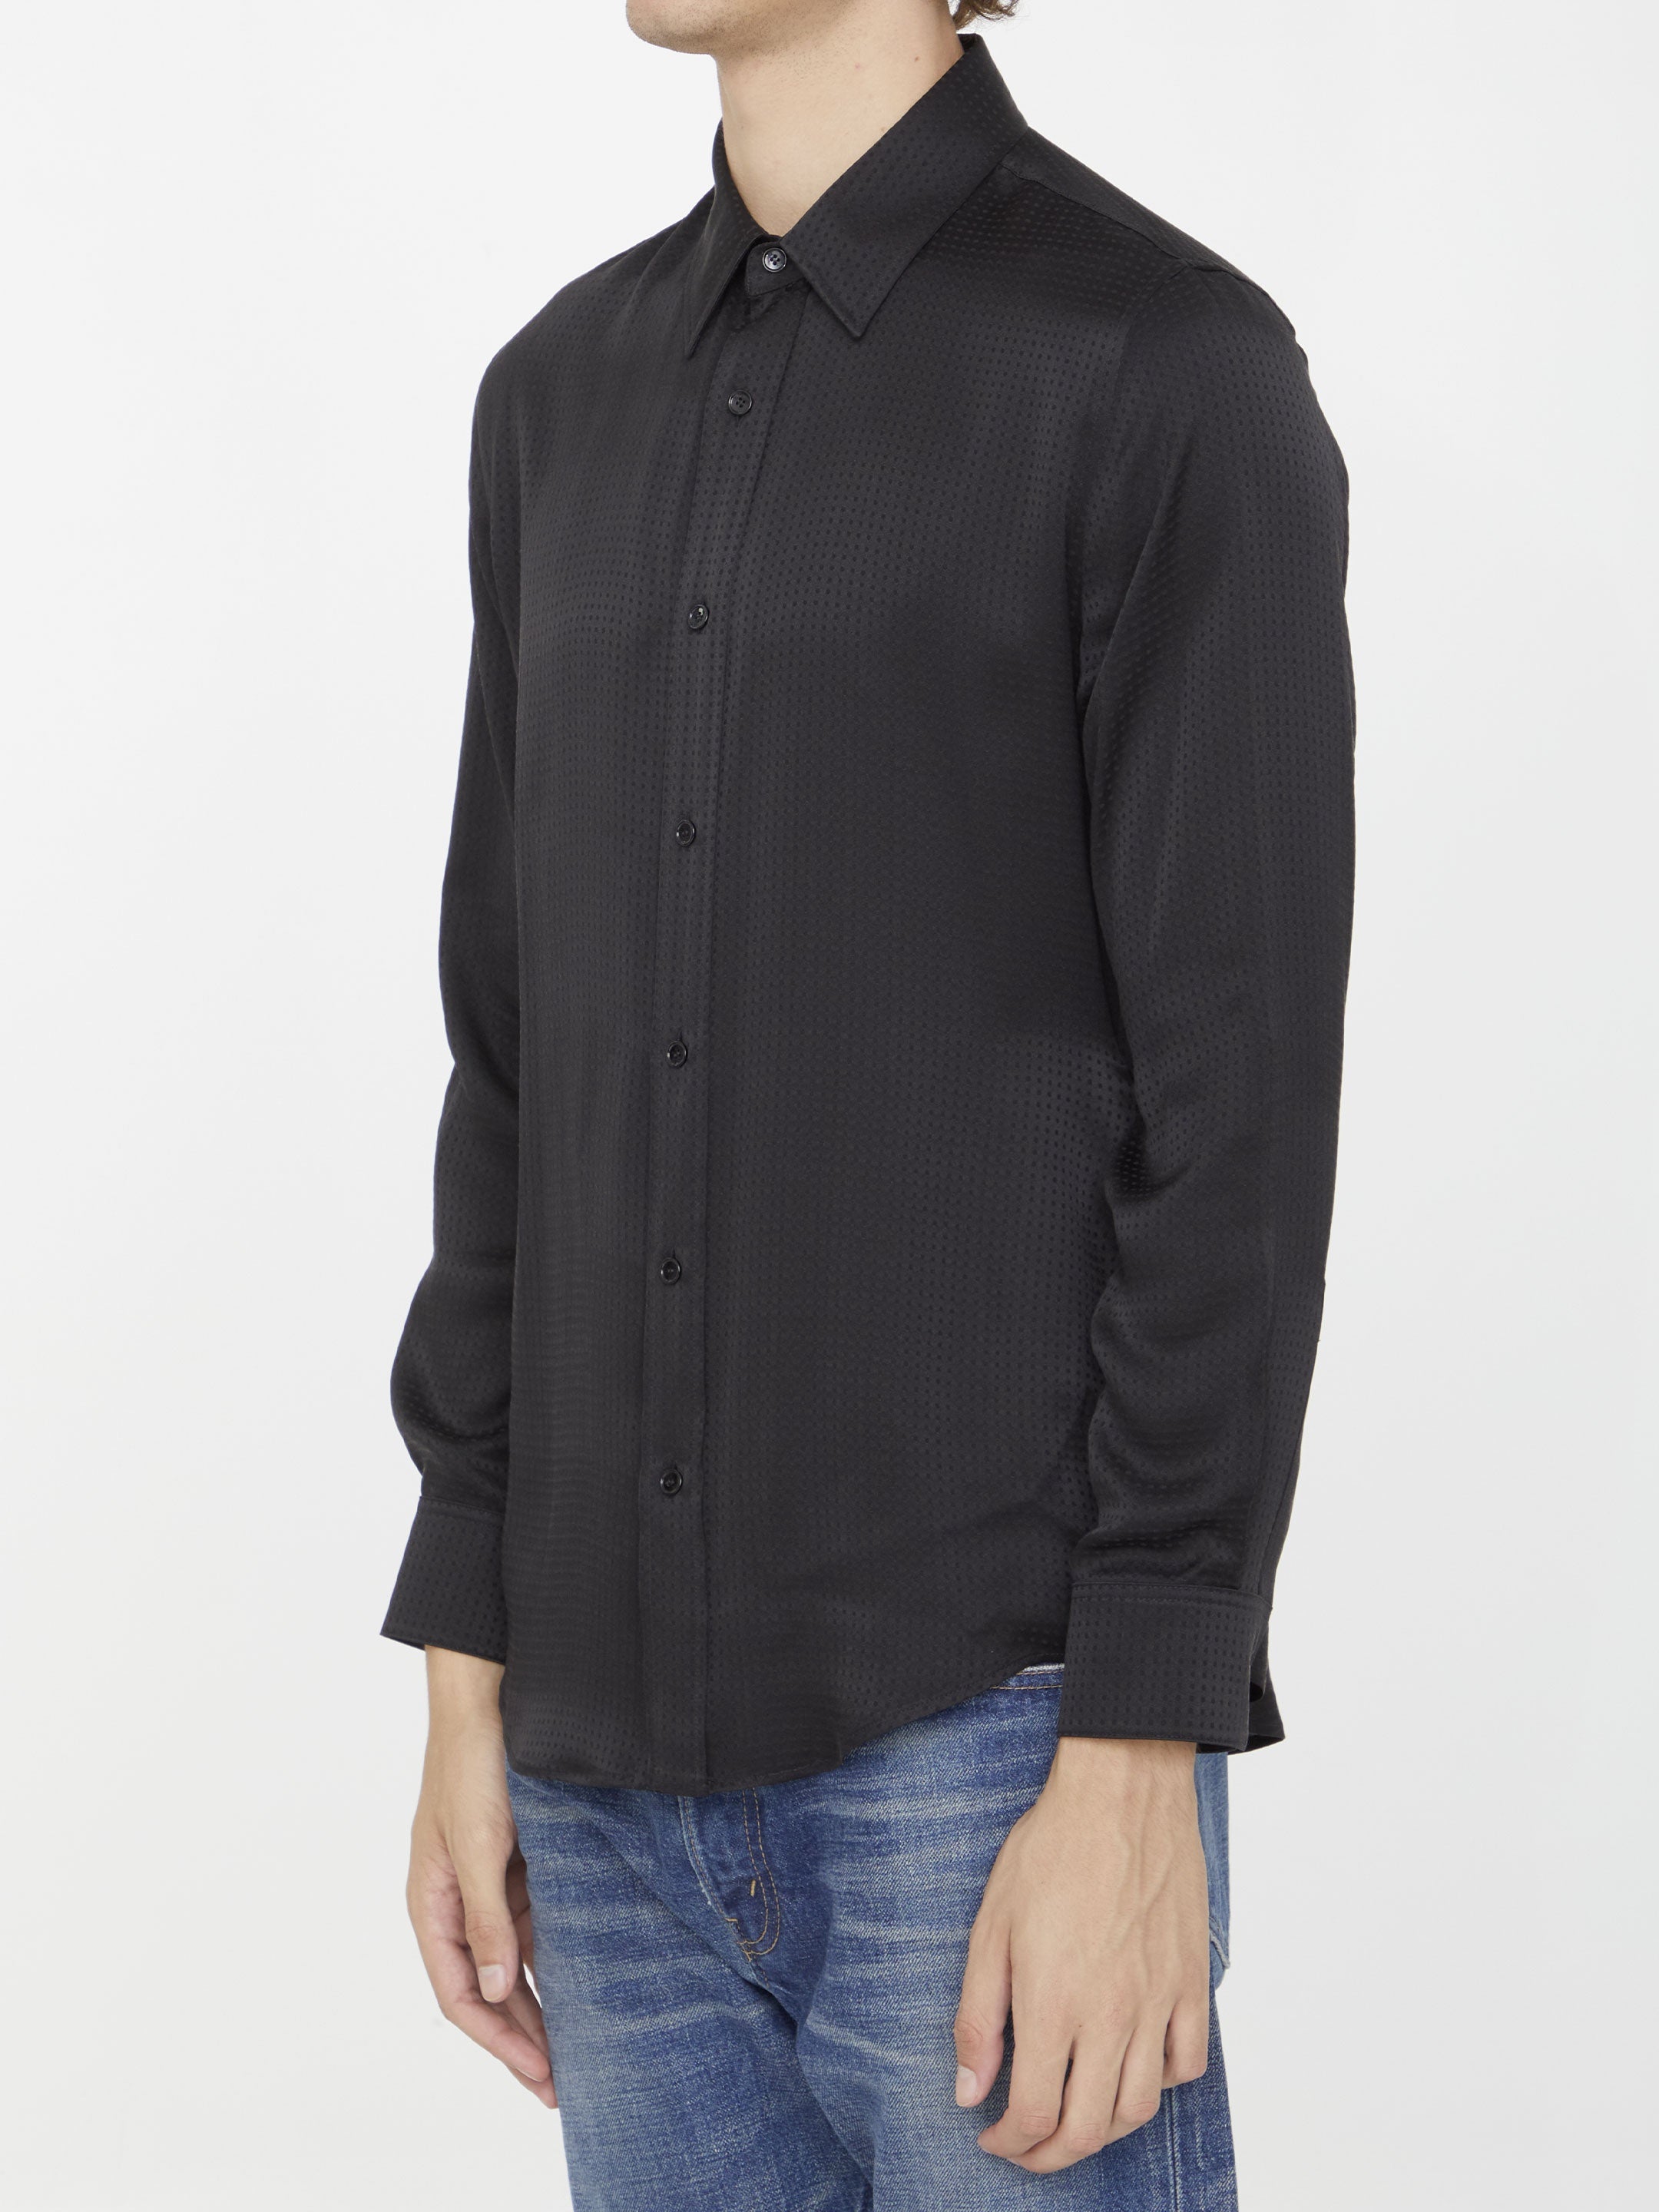 CELINE-OUTLET-SALE-Black-silk-shirt-Shirts-ARCHIVE-COLLECTION-2.jpg